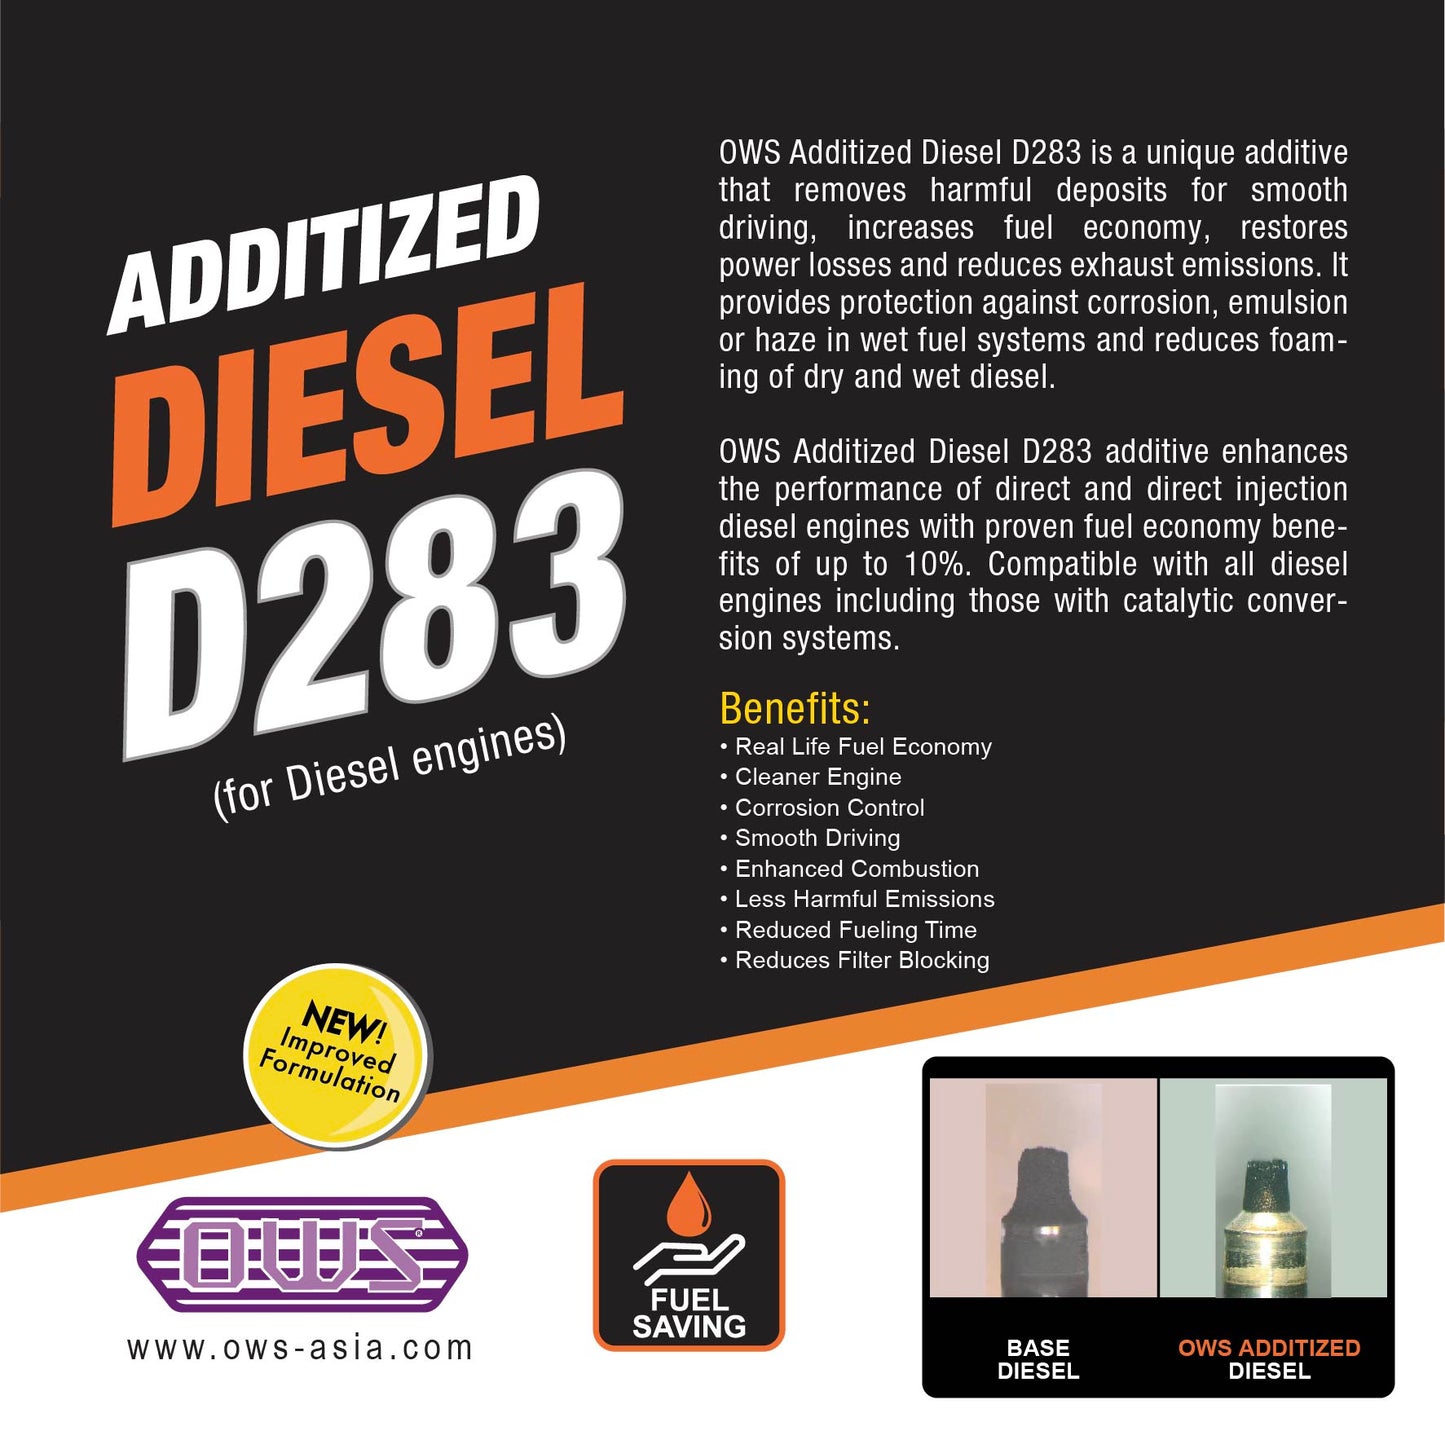 OWS Additized Diesel D283